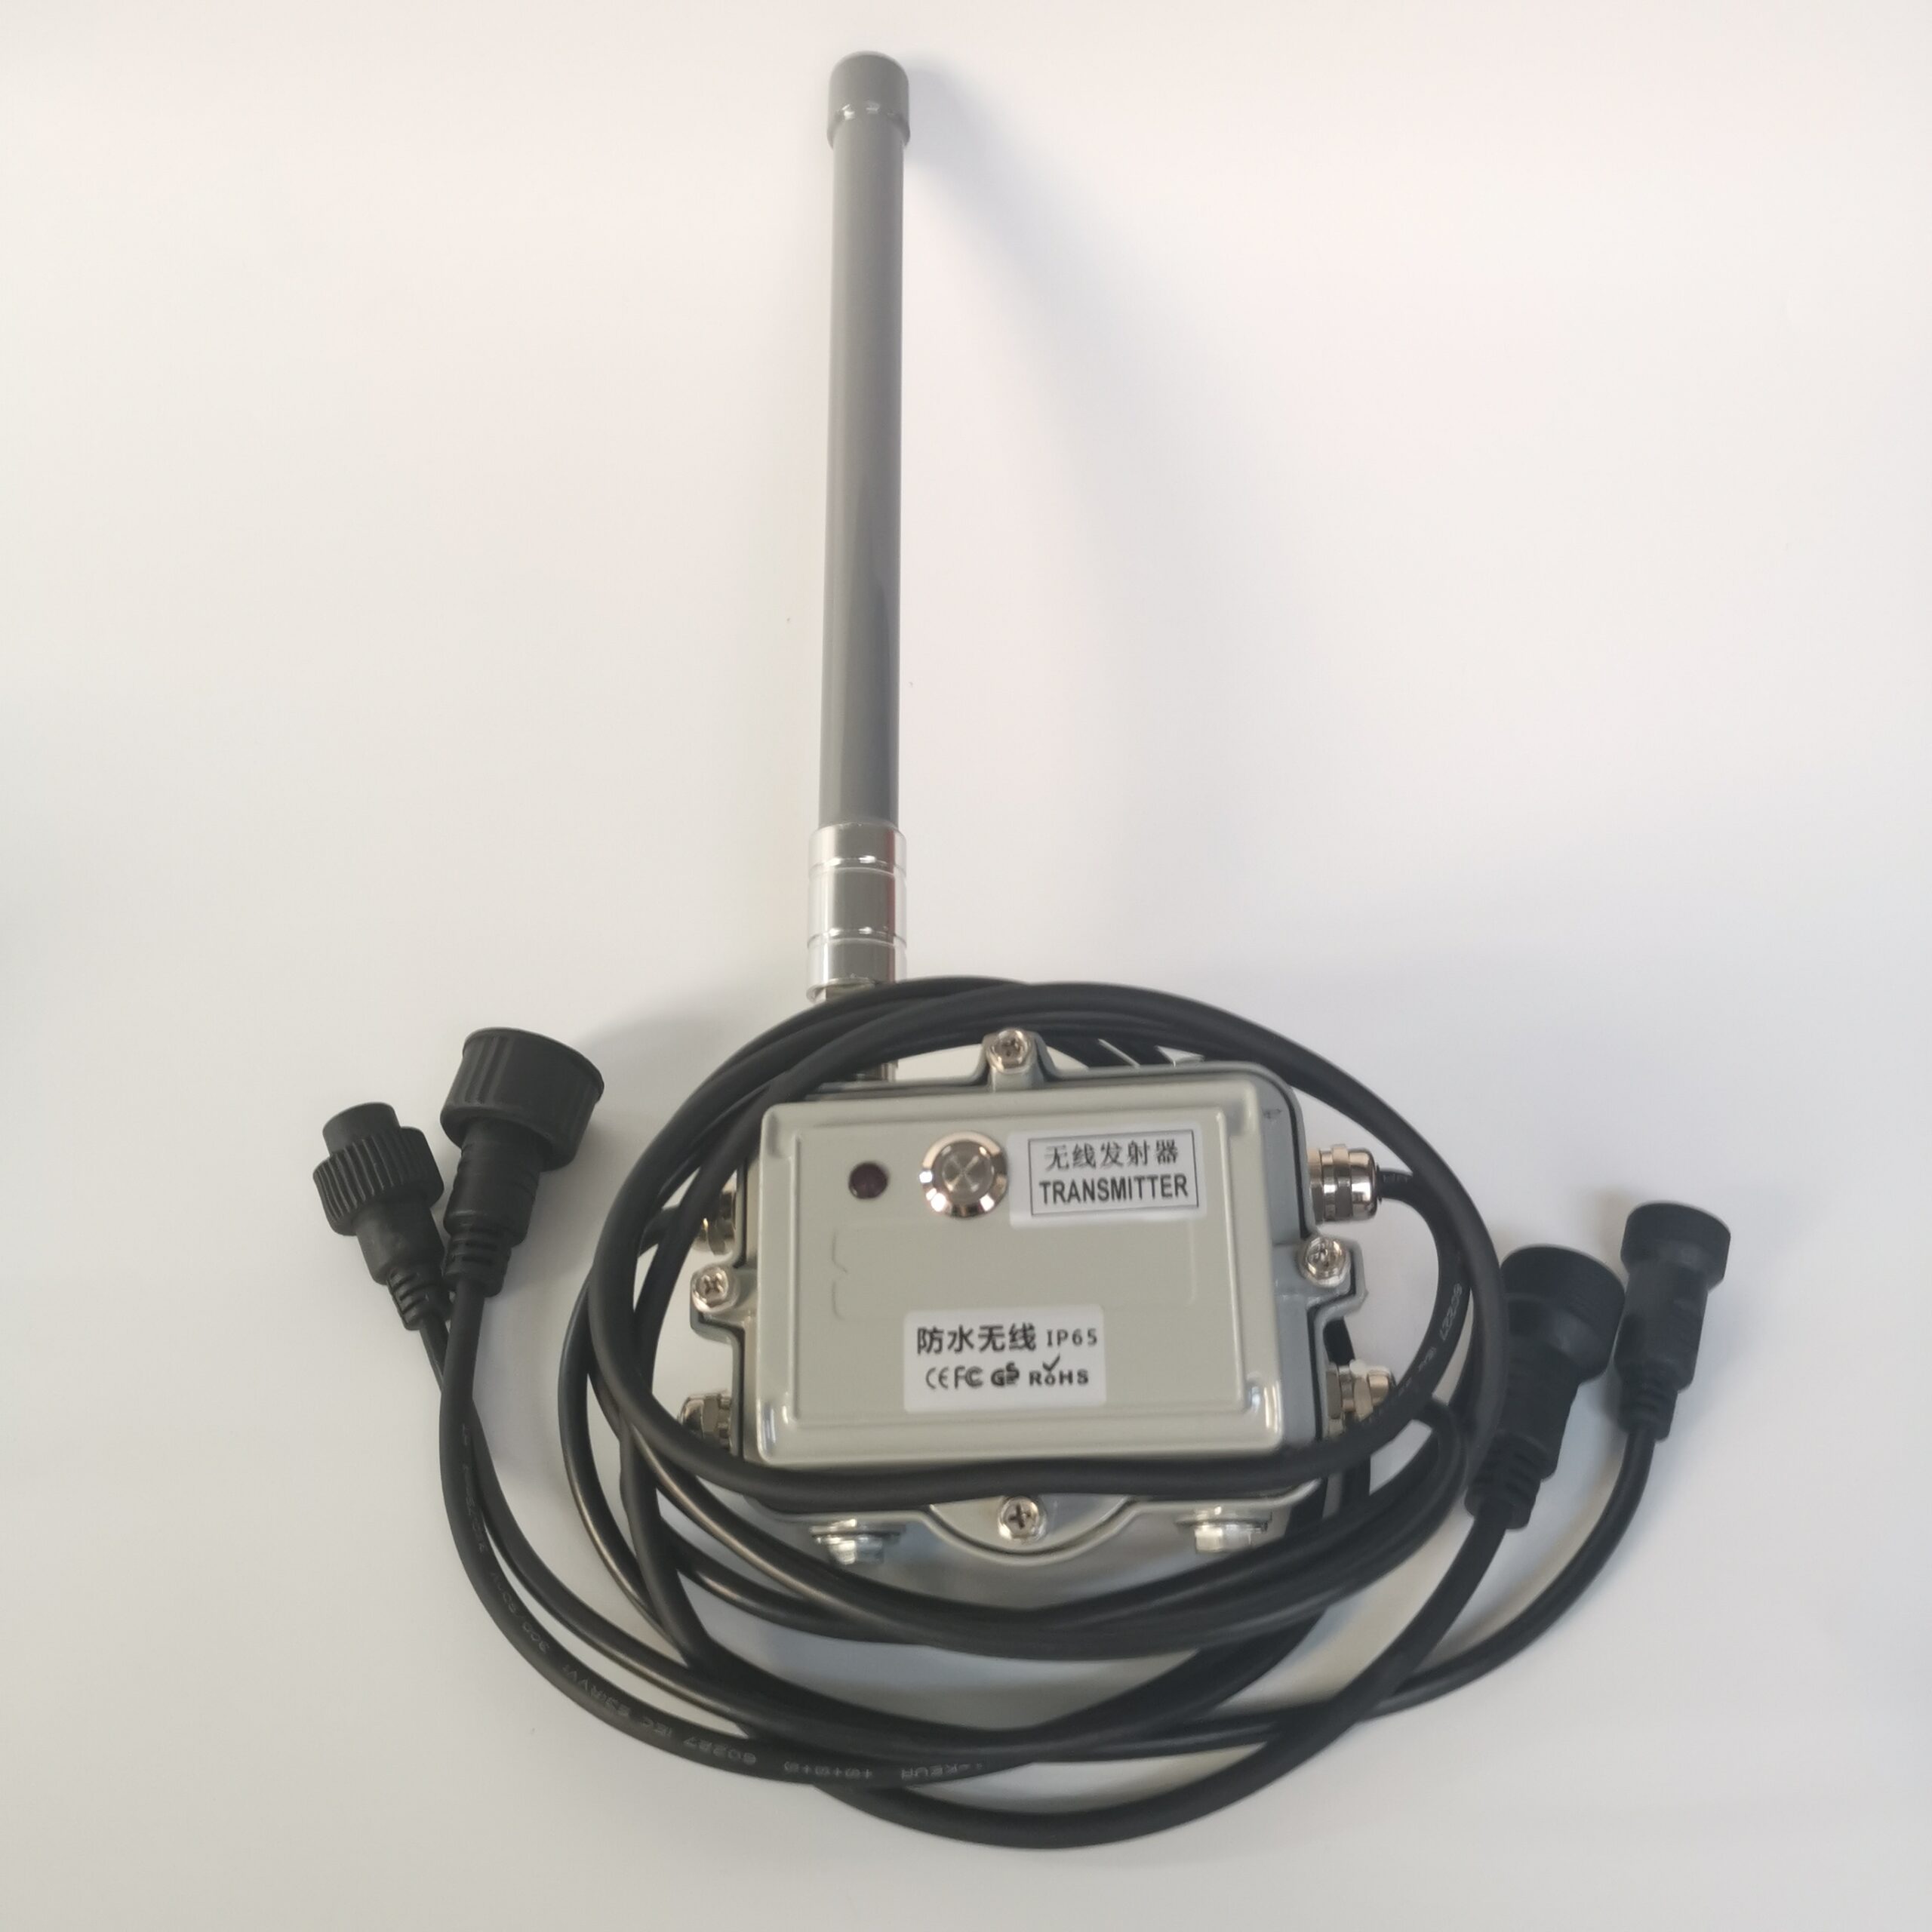 Sweden chip indoor waterproof DMX512 wireless transmitter No delay (2.4G/5.8G dual frequency ) - Dmx controller - 7